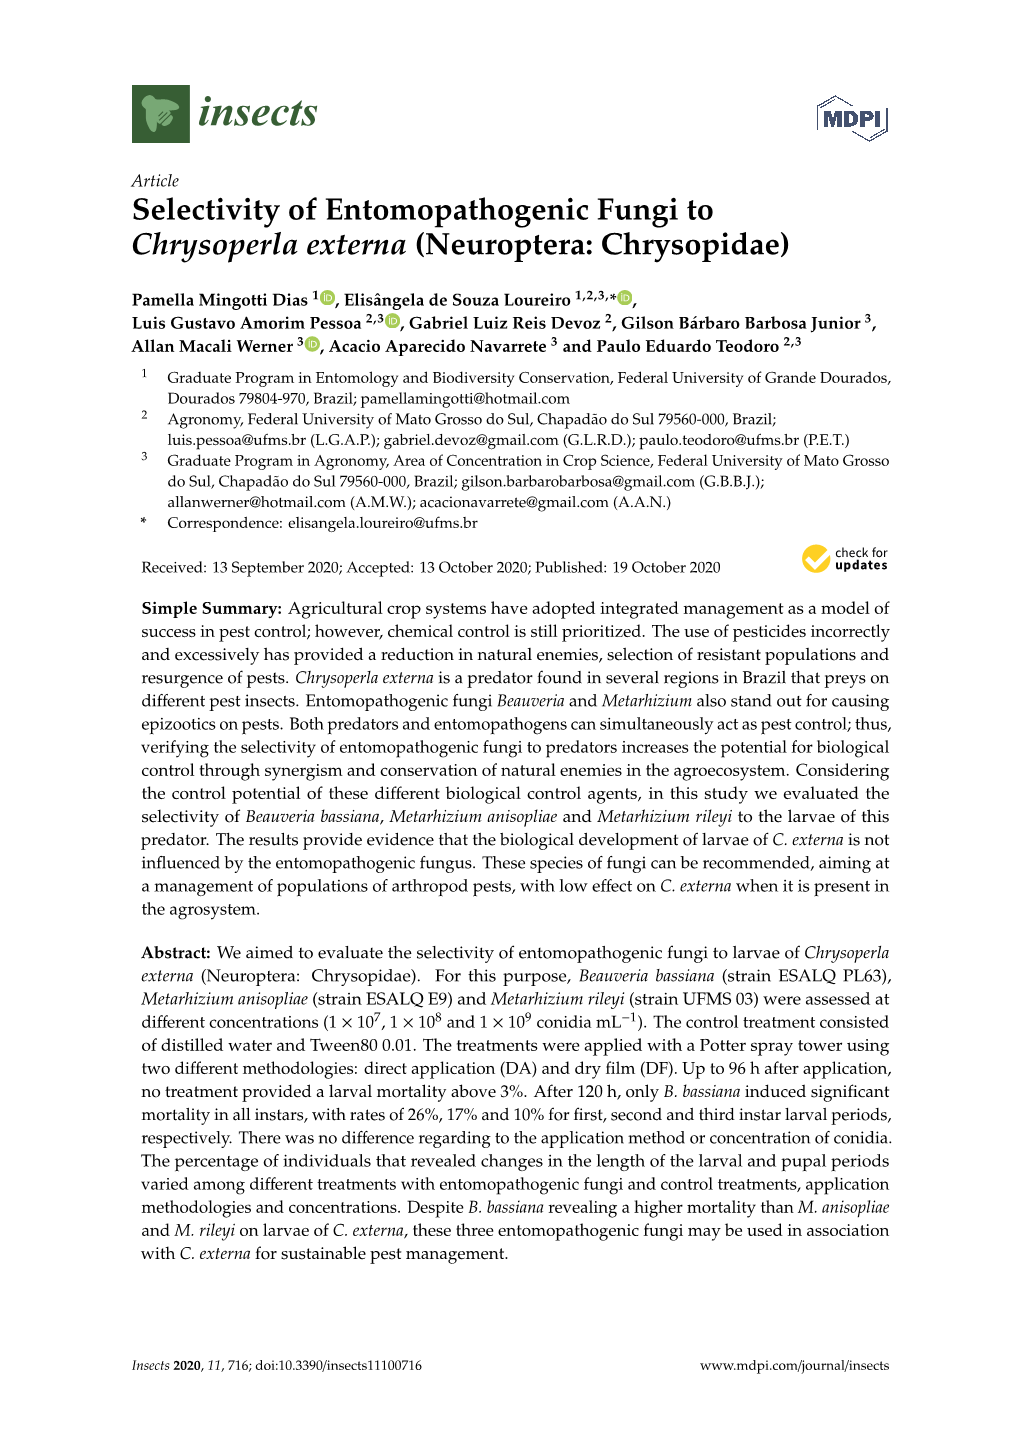 Selectivity of Entomopathogenic Fungi to Chrysoperla Externa (Neuroptera: Chrysopidae)